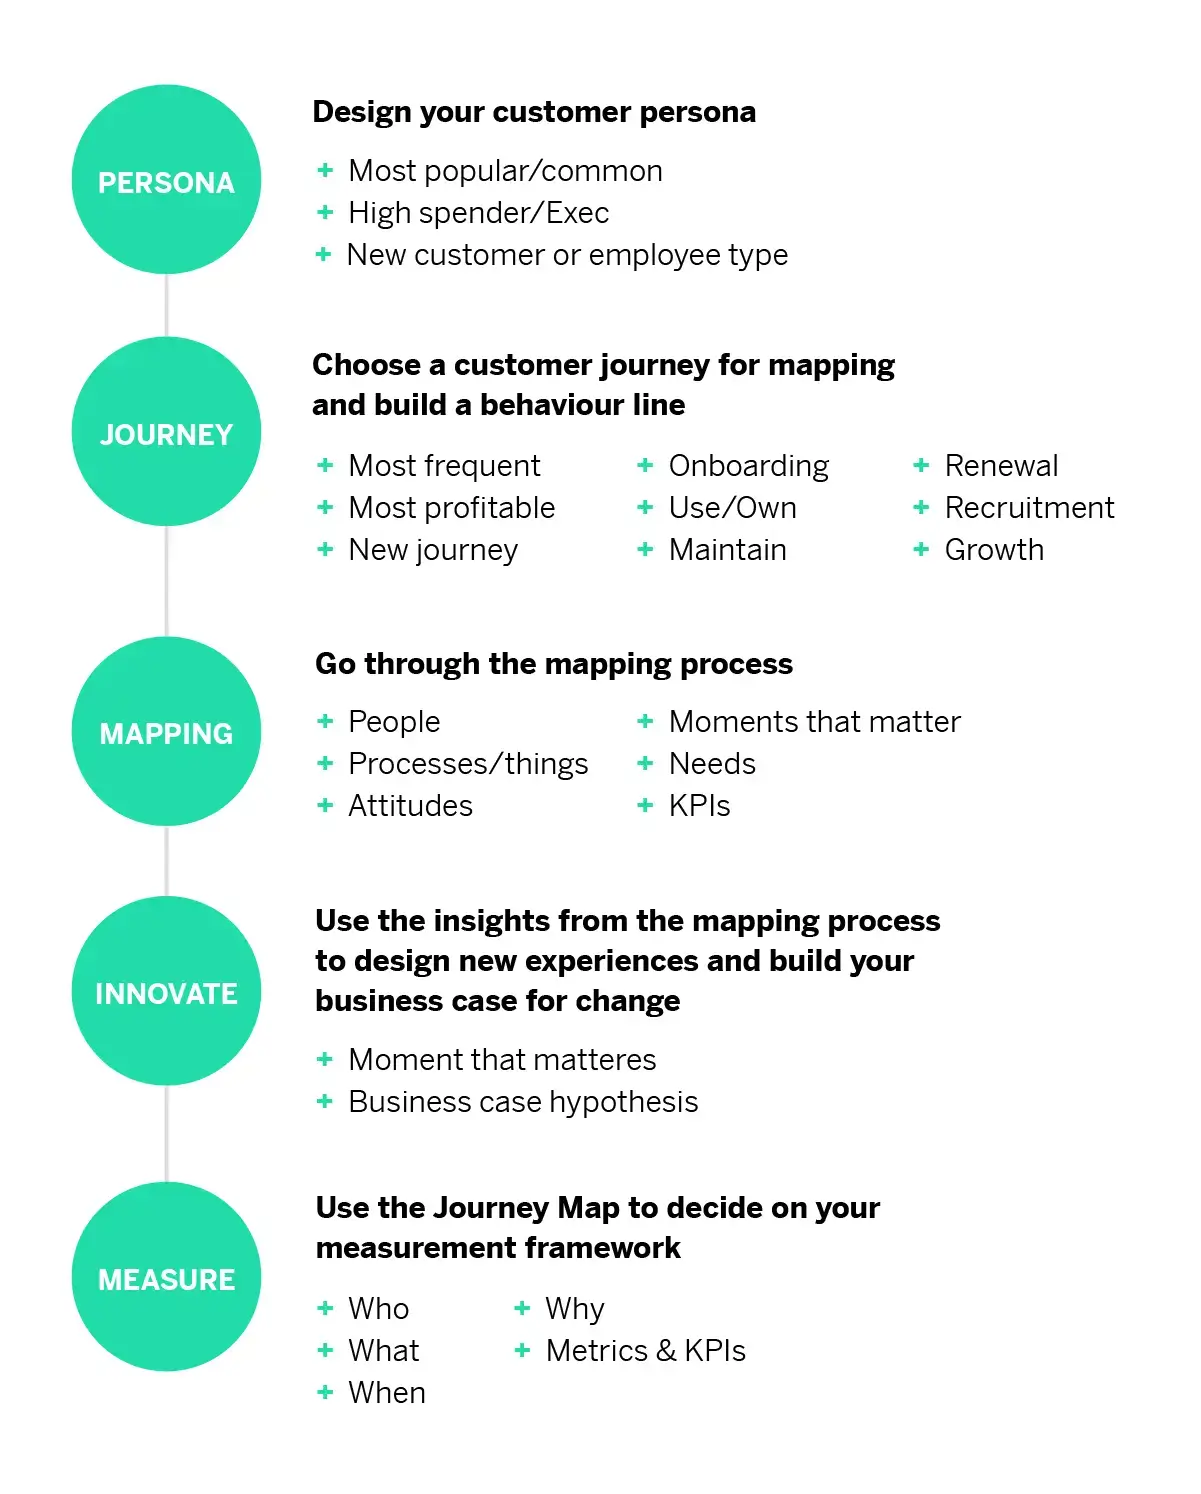 customer journey metrics